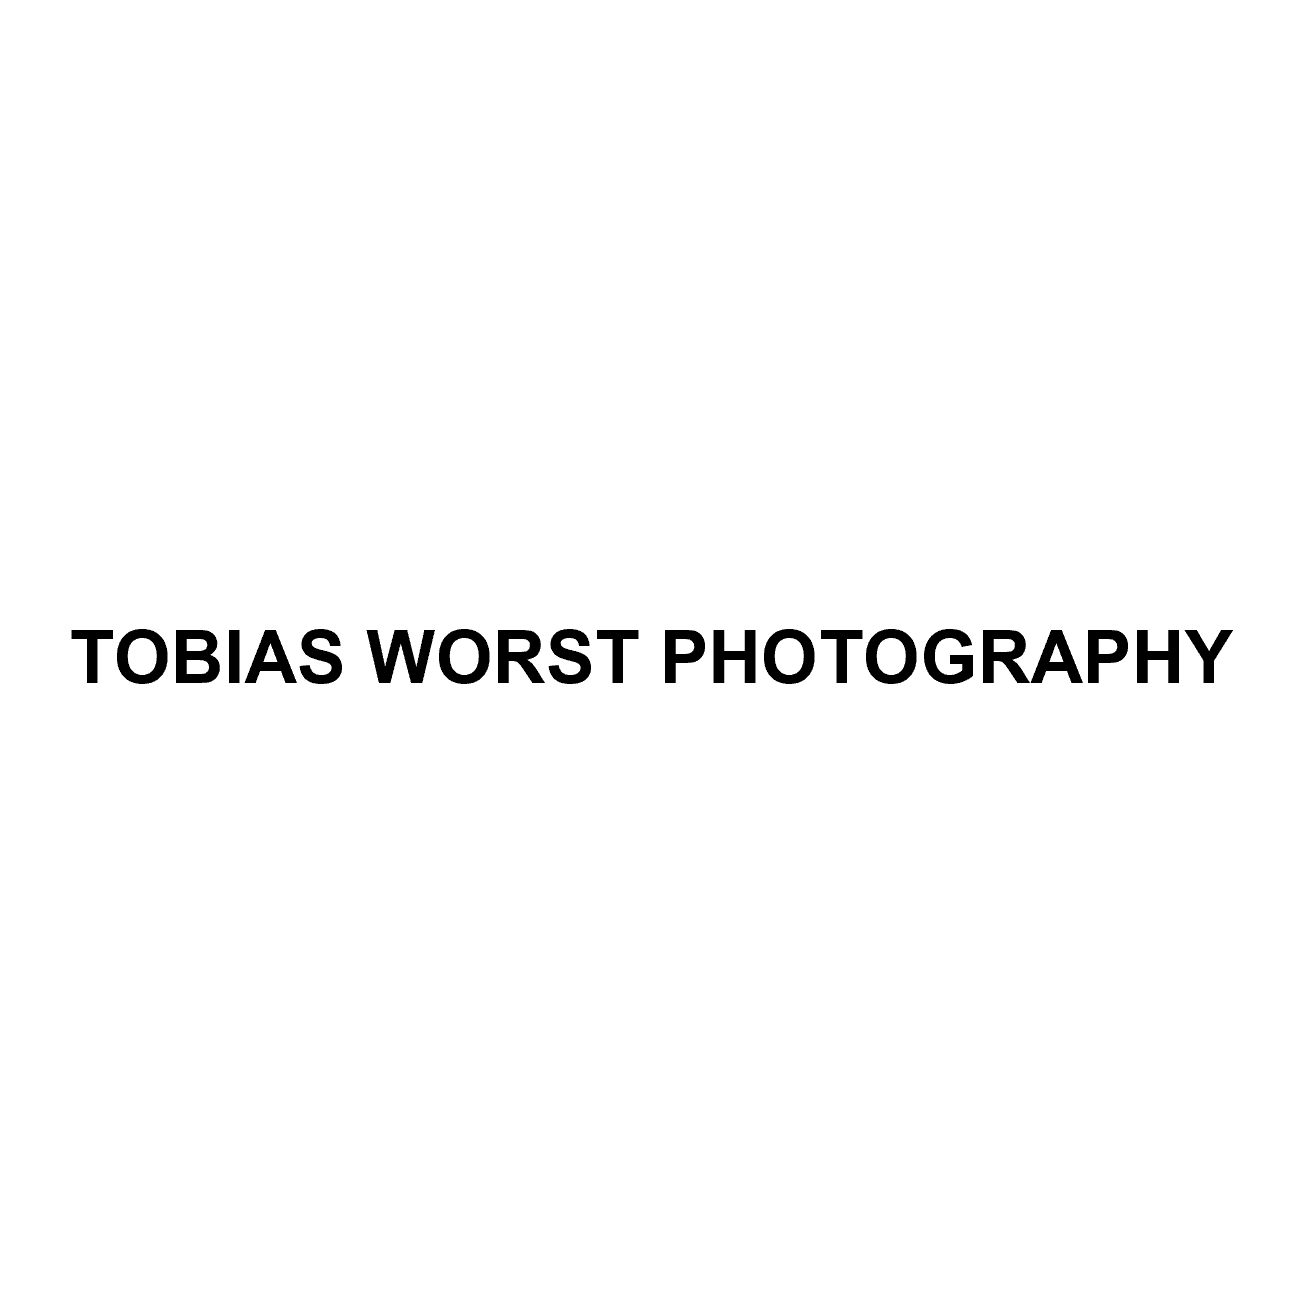 Tobias Worst Photography is Capabel